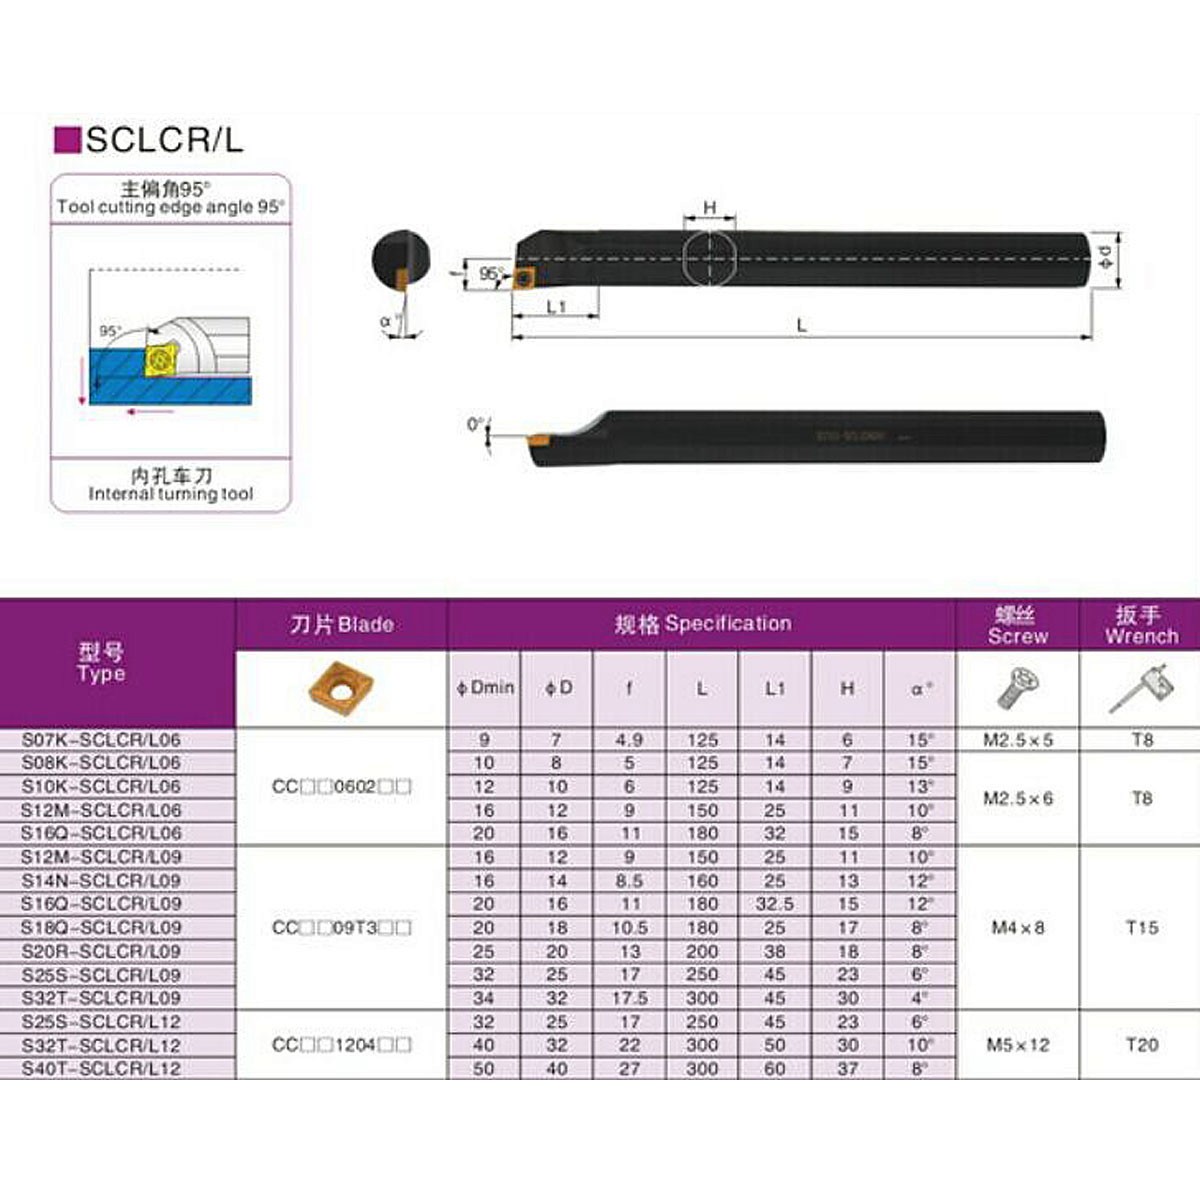 Drillpro-3pcs-SCLCR-Lathe-Boring-Bar-Turning-Tool-Holder-Set-with-10pcs-Blue-Nano-CCMT0602-Inserts-1284740-1